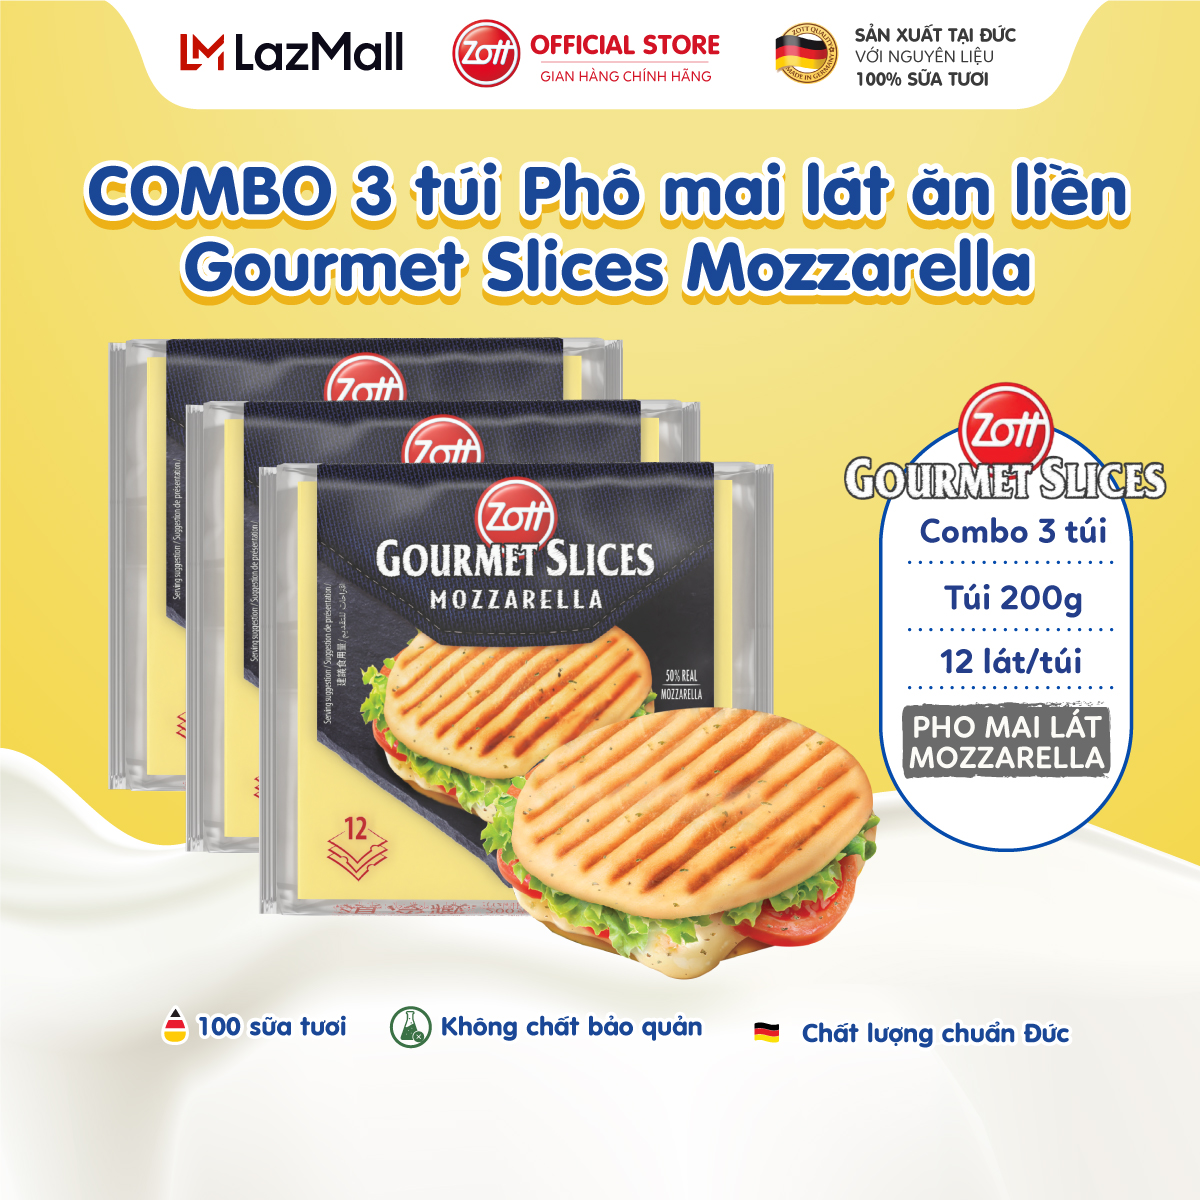 COMBO 3 túi Phô mai lát Zott Gourmet Slices MOZZARELLA nhập khẩu từ Đức